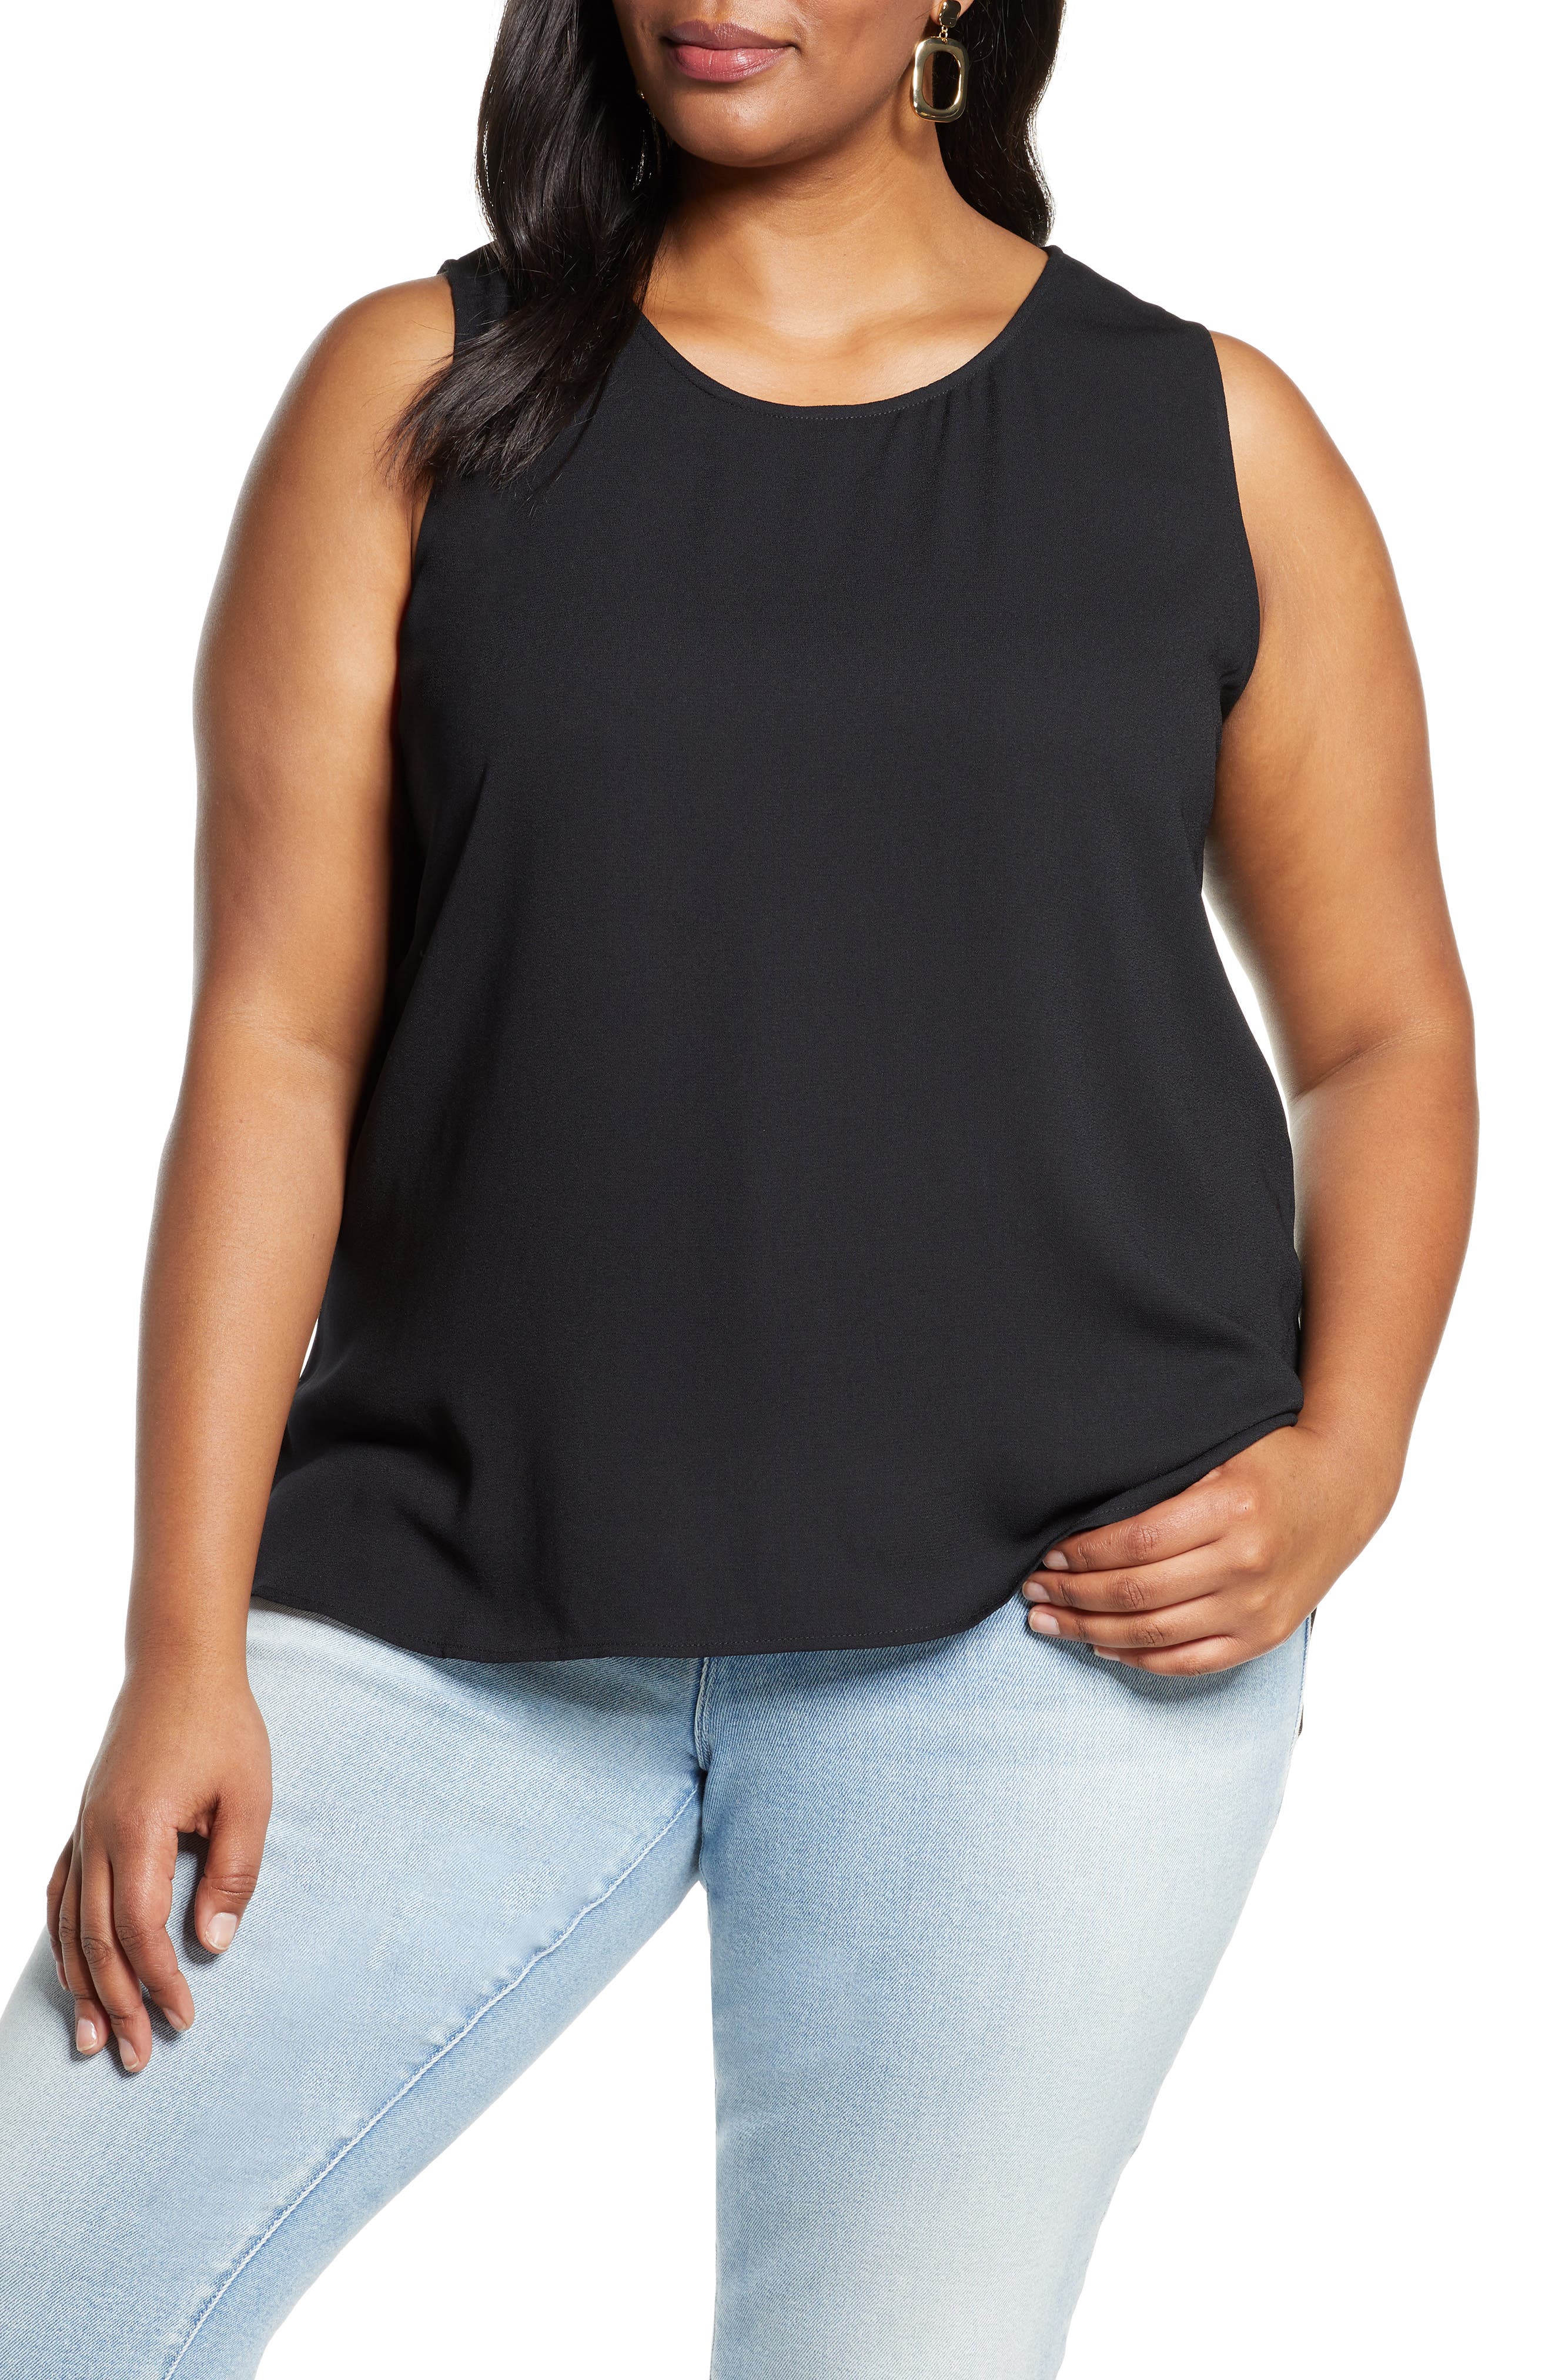 Frunalte Plus Size Vest Shirt for Women V-Neck Solid Sleeveless Vest Tops Shirt Blouse Casual Summer Tank Tops T-Shirt